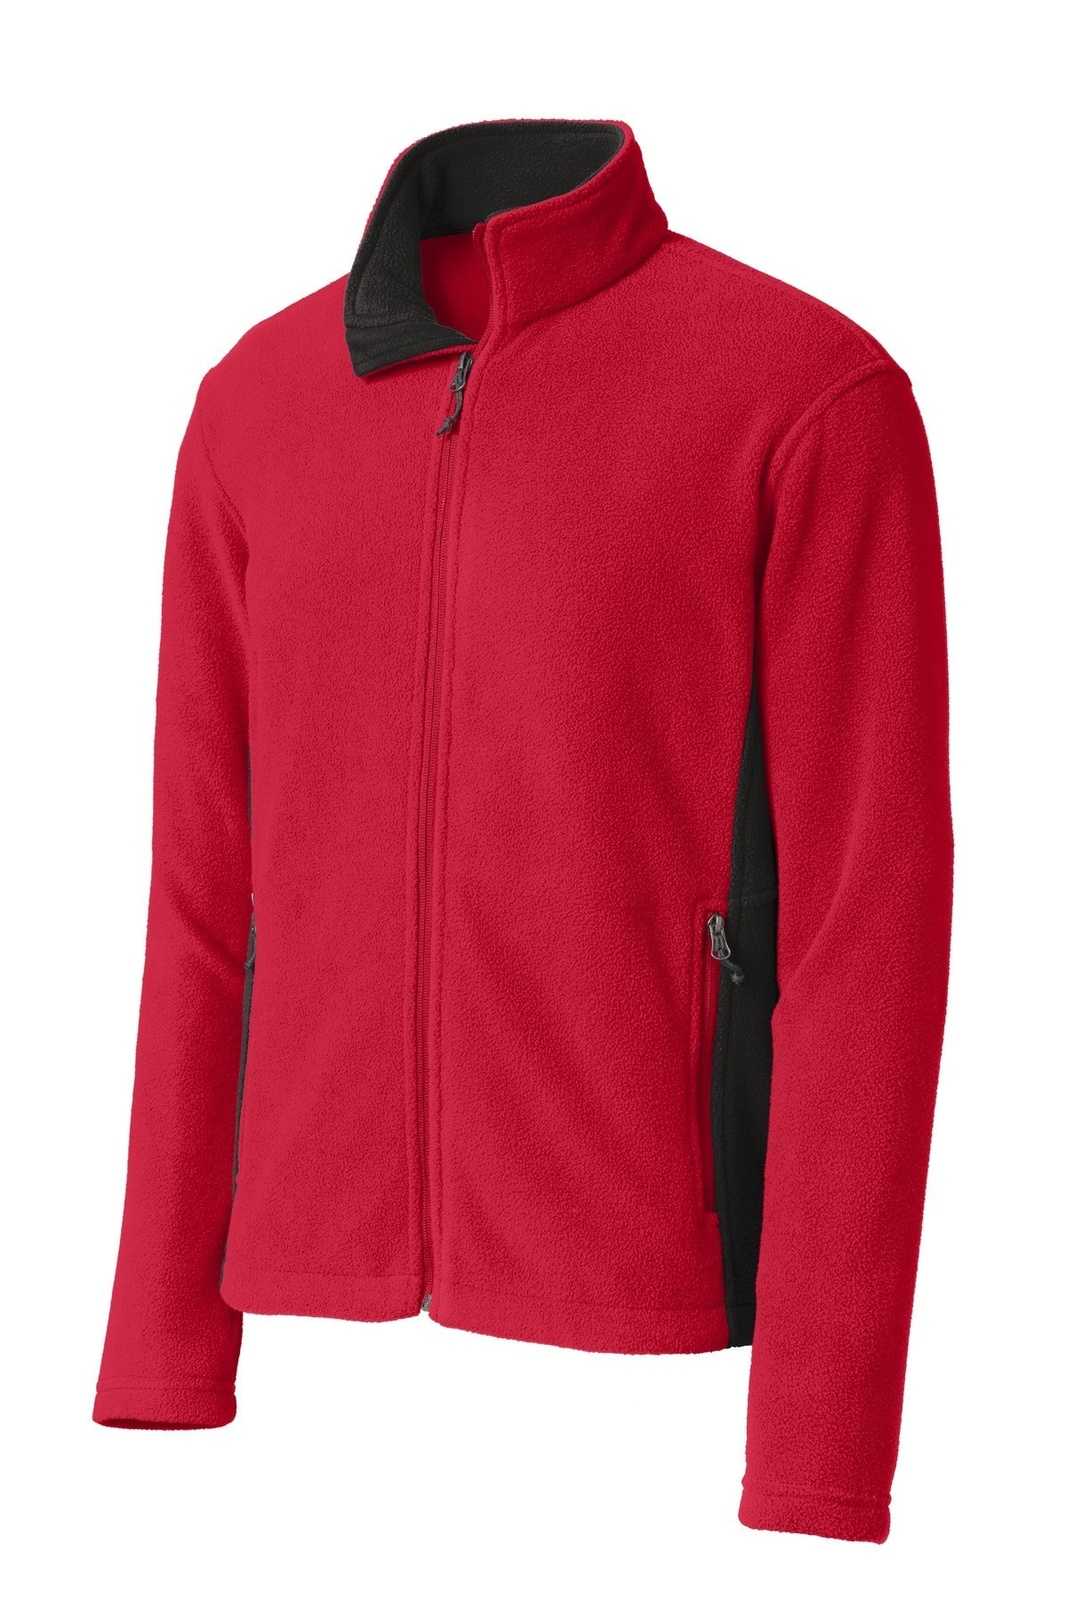 Port Authority F216 Colorblock Value Fleece Jacket - Rich Red Black - HIT a Double - 5